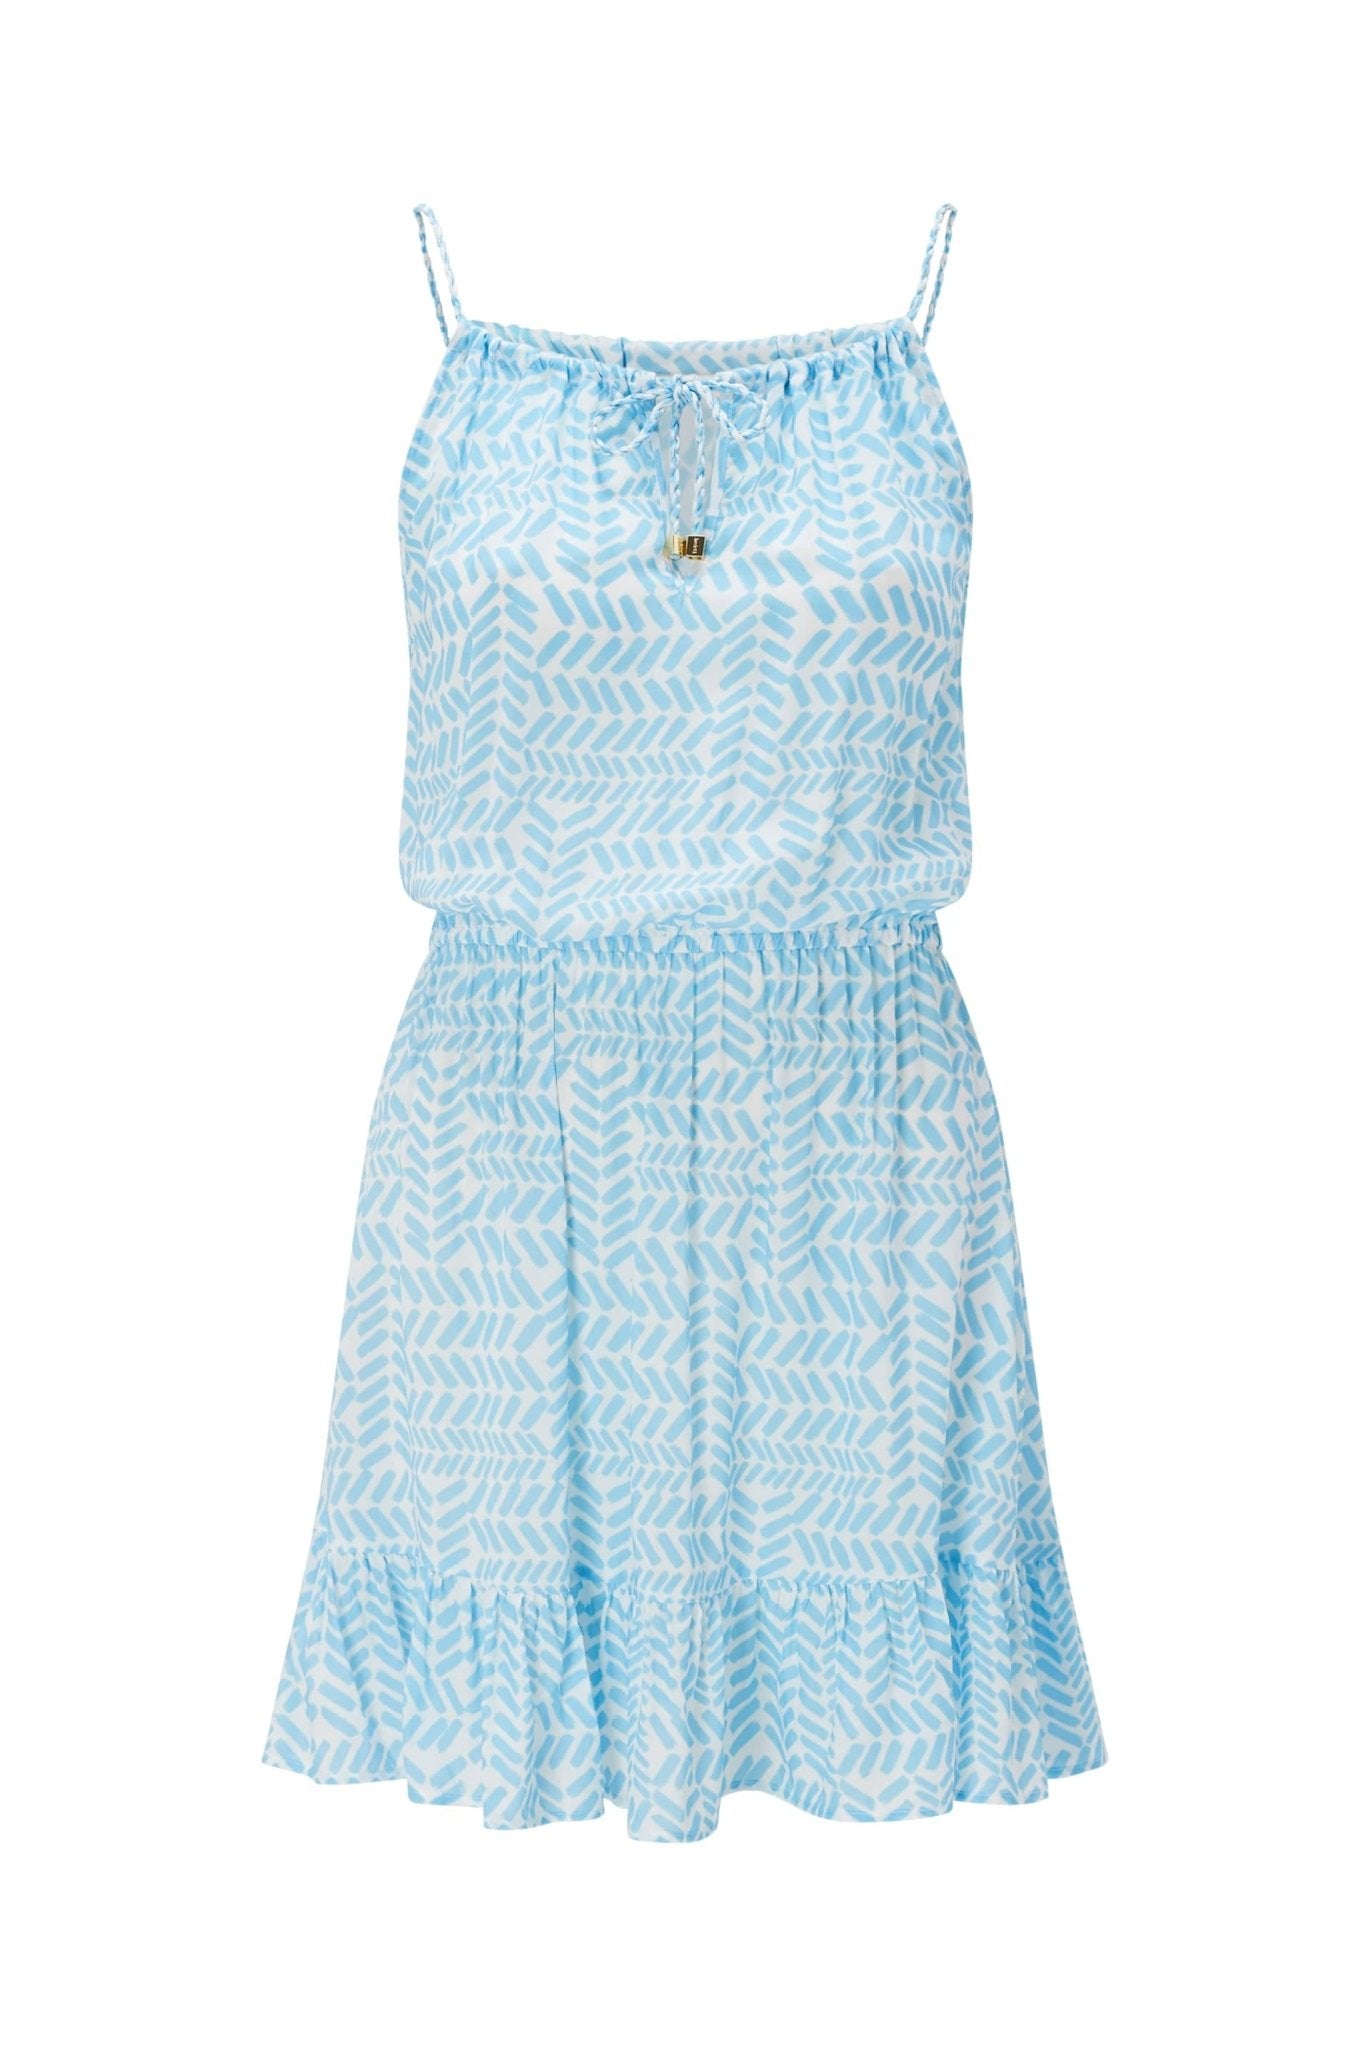 Zanzibar Tie Front Frill Mini Dress - Heidi Klein - UK Store